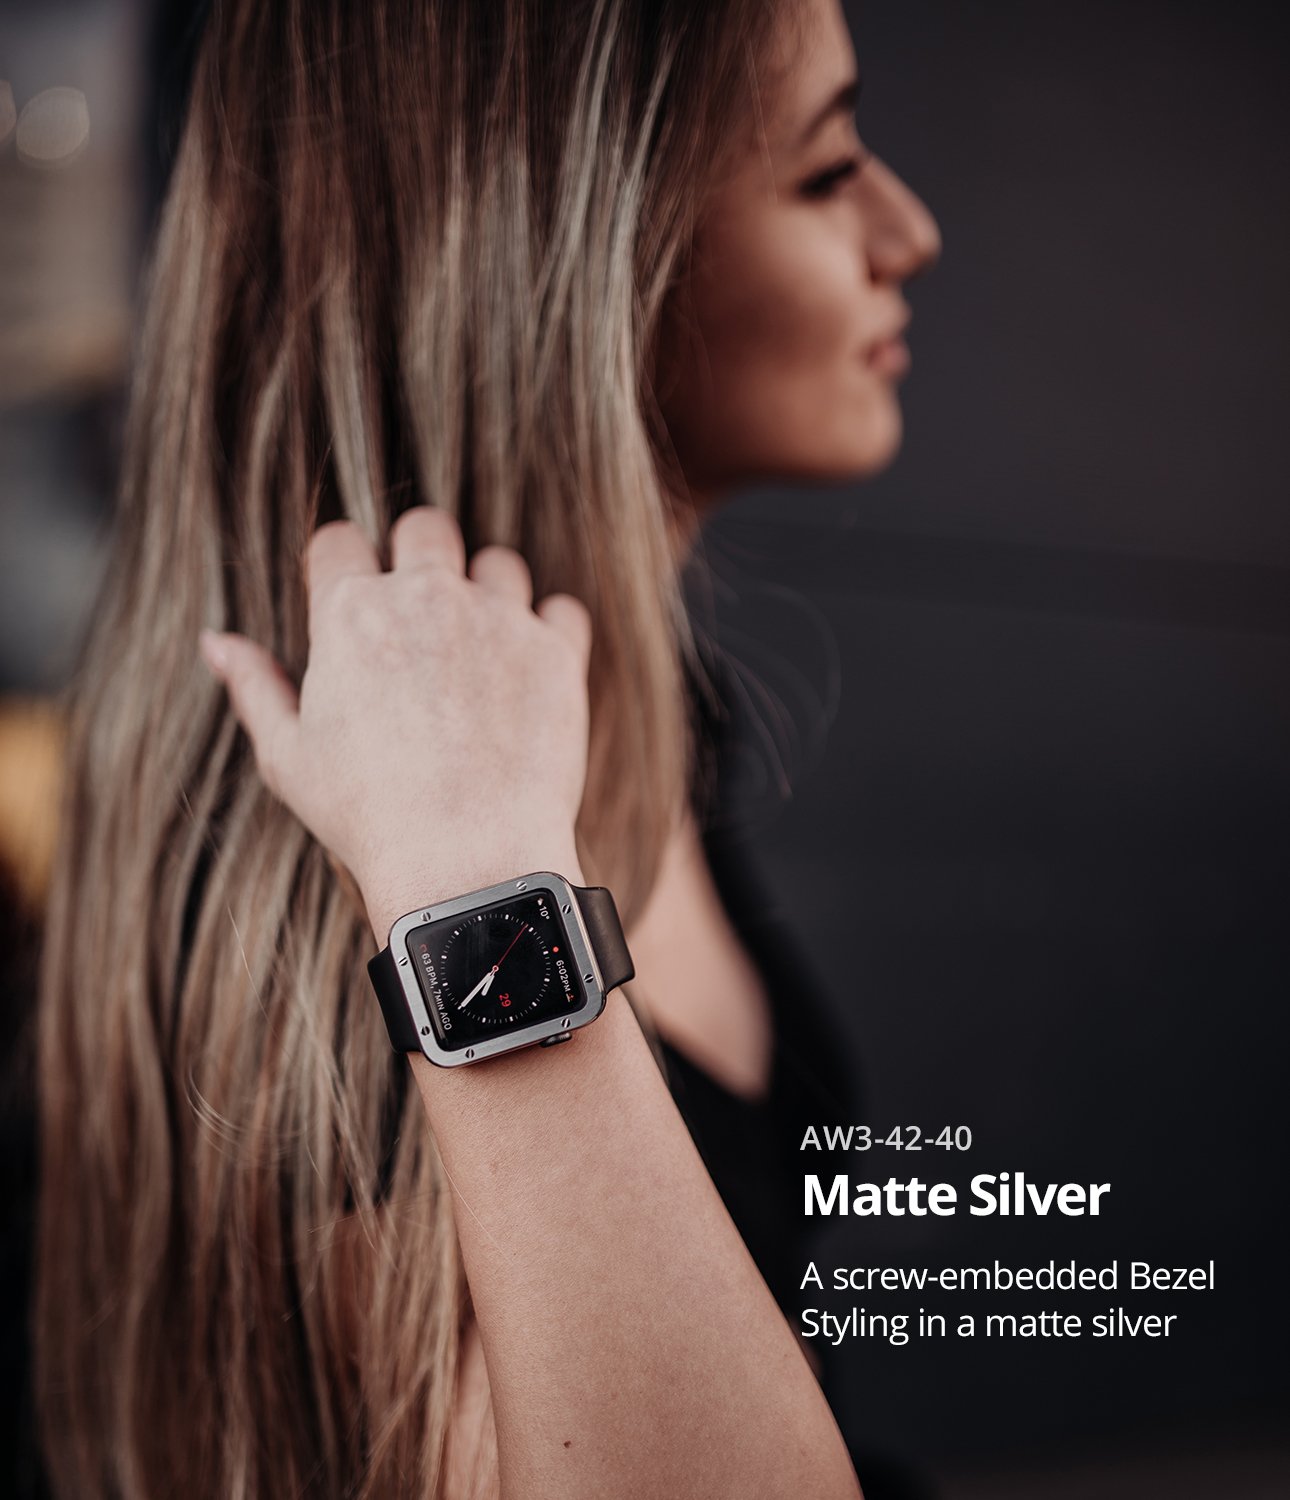 Apple Watch Series 3 / 2 / 1 (42mm) | Premium Bezel Styling Hublot